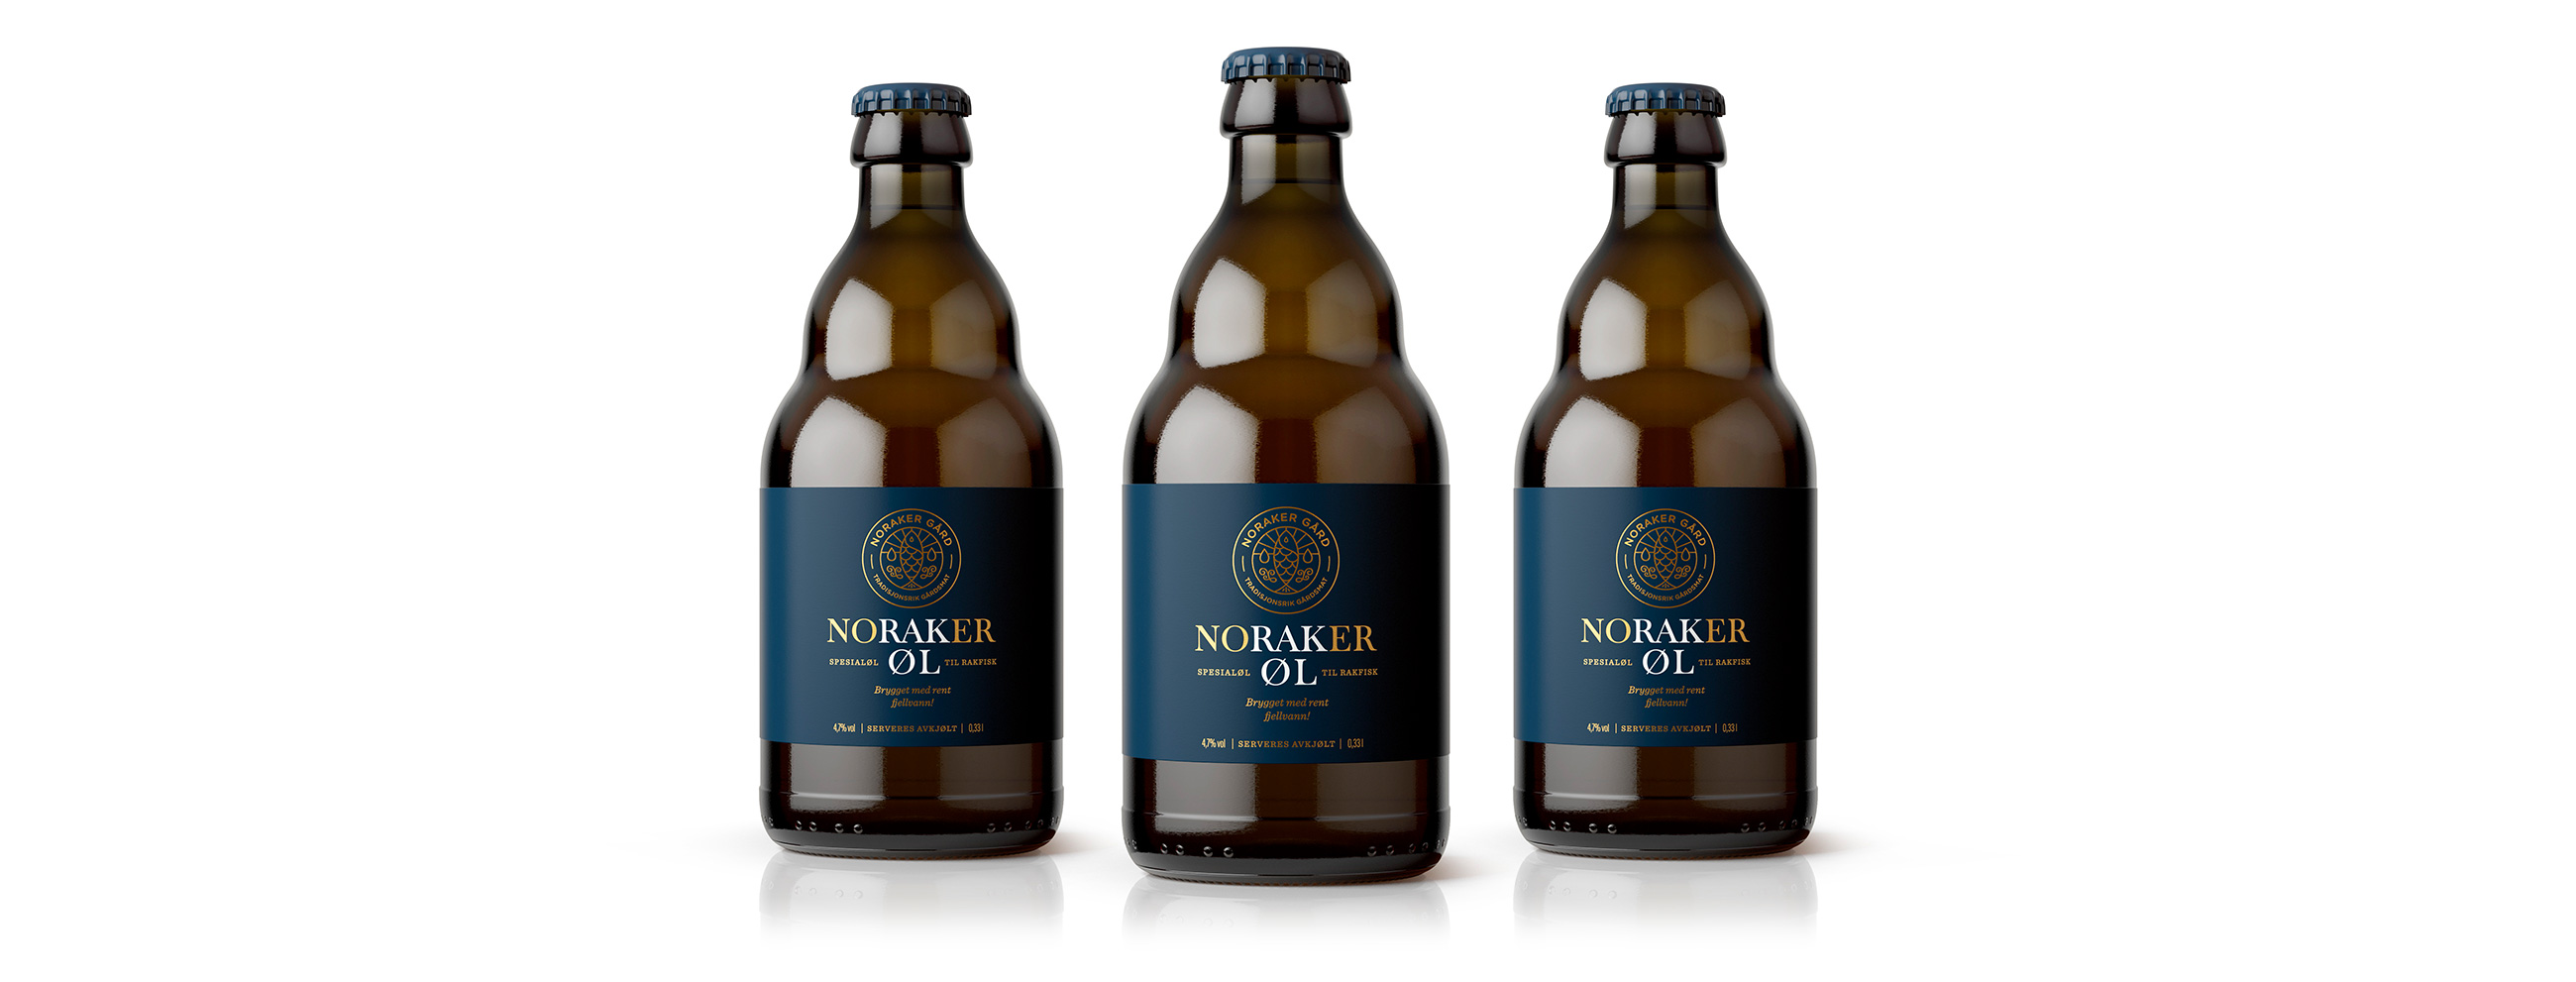 Noraker gård rakfisk øl beer bottles flasker. Emballasje packaging design.